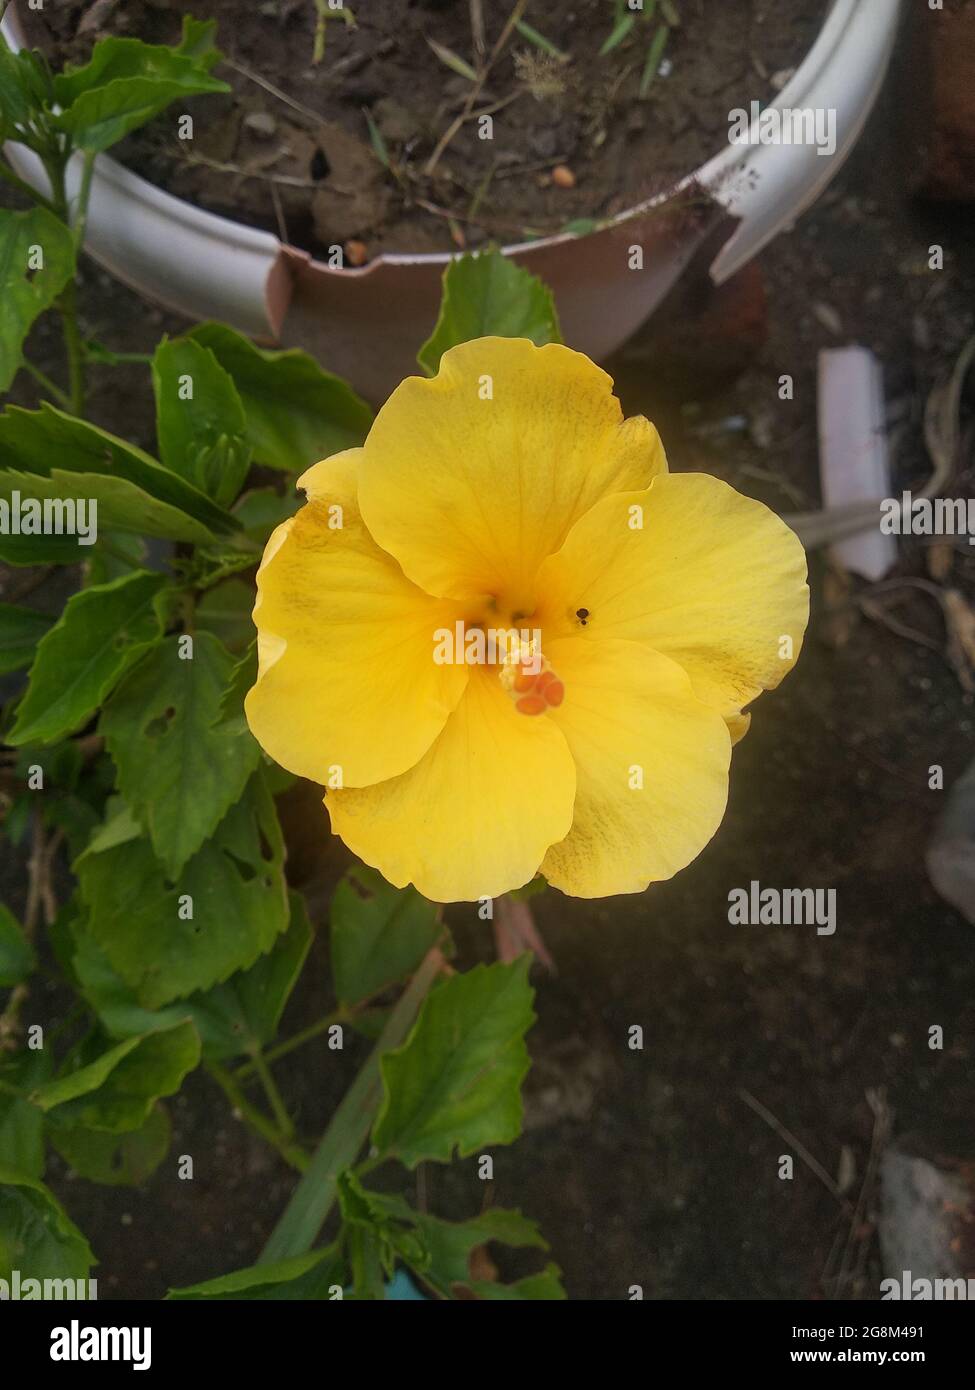 yellow flower in the garden Stock Photo